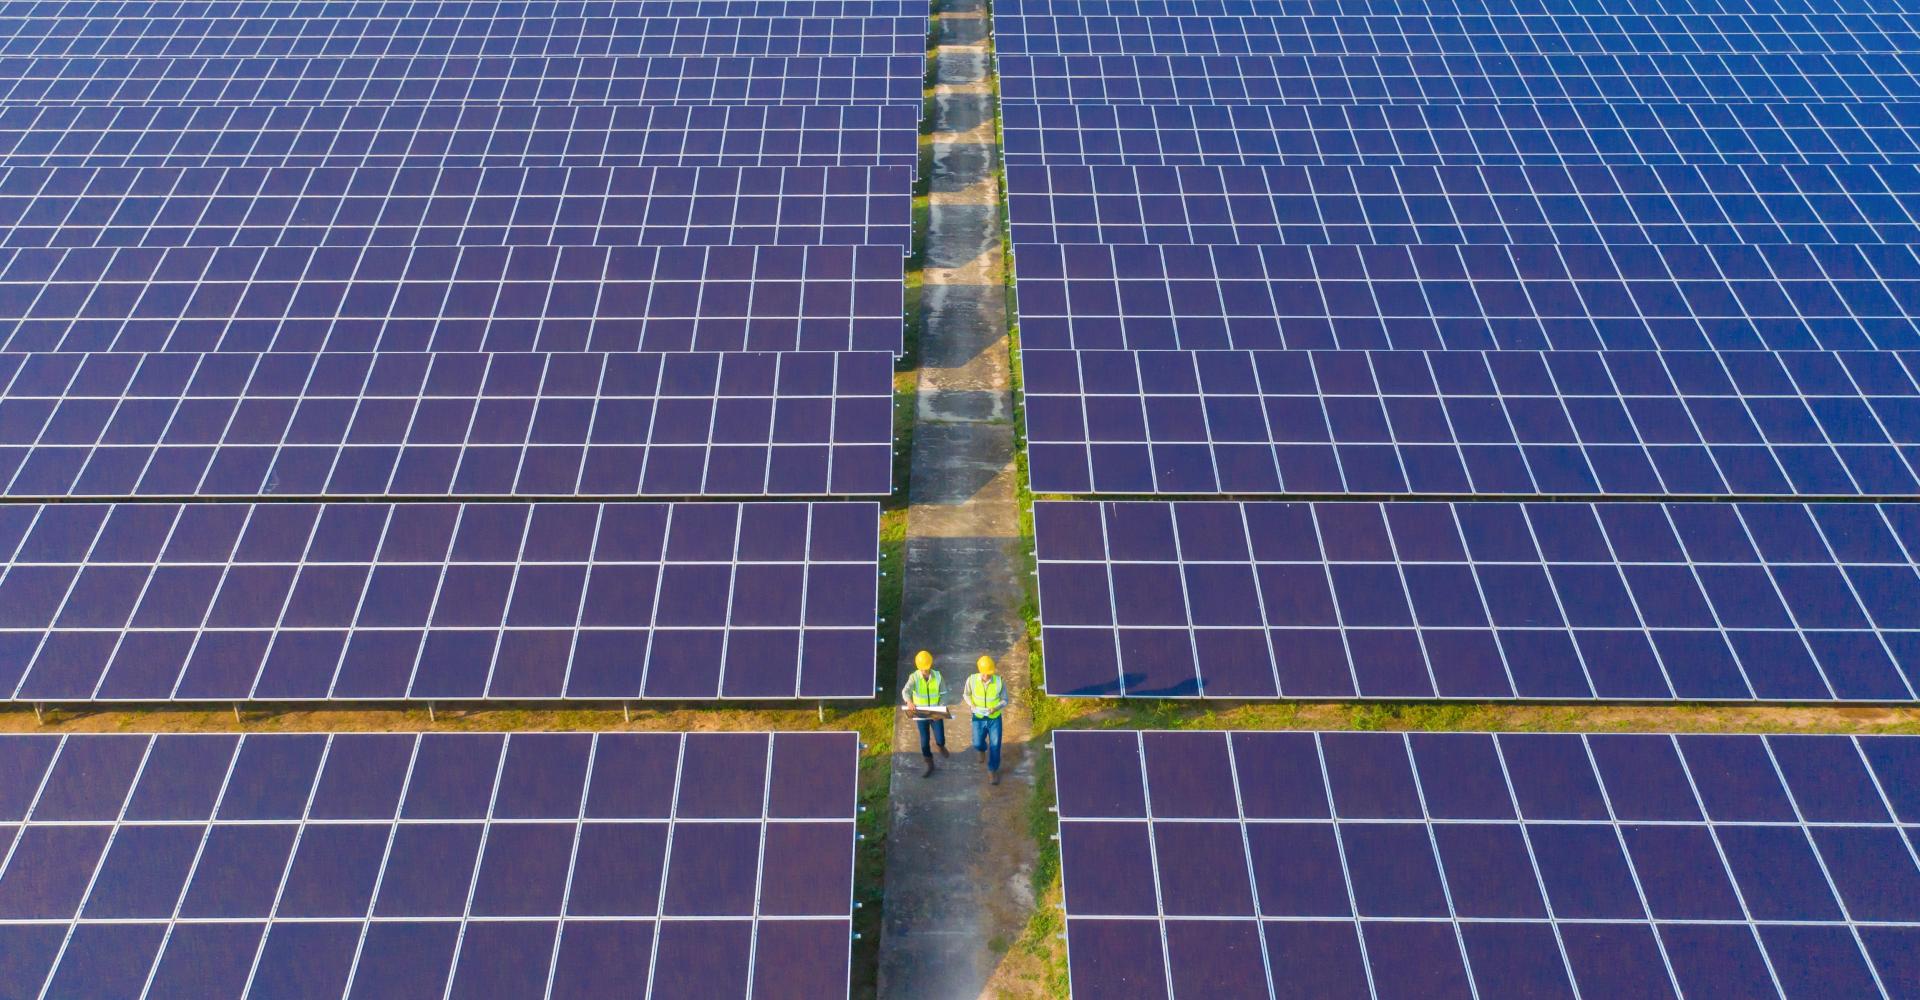 Workers walk through utility-scale solar array